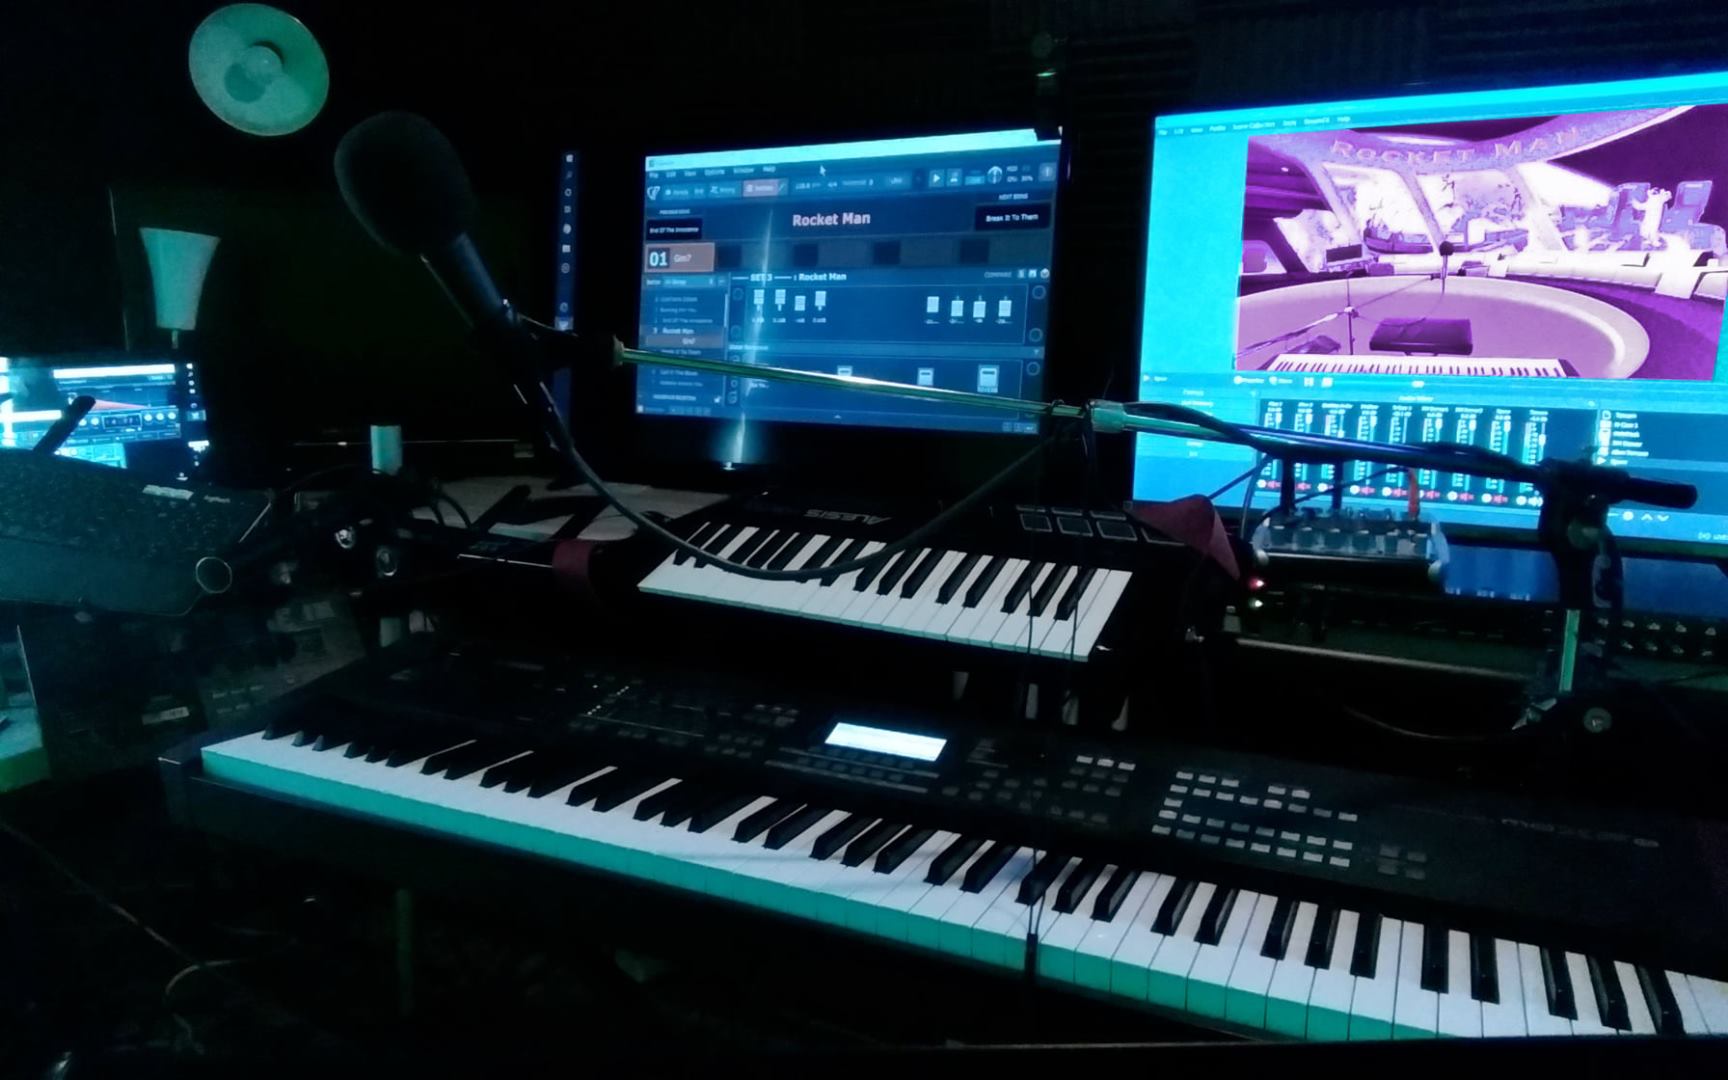 Paul Gandhi uses Gig Performer for Live streaming using StreetJelly